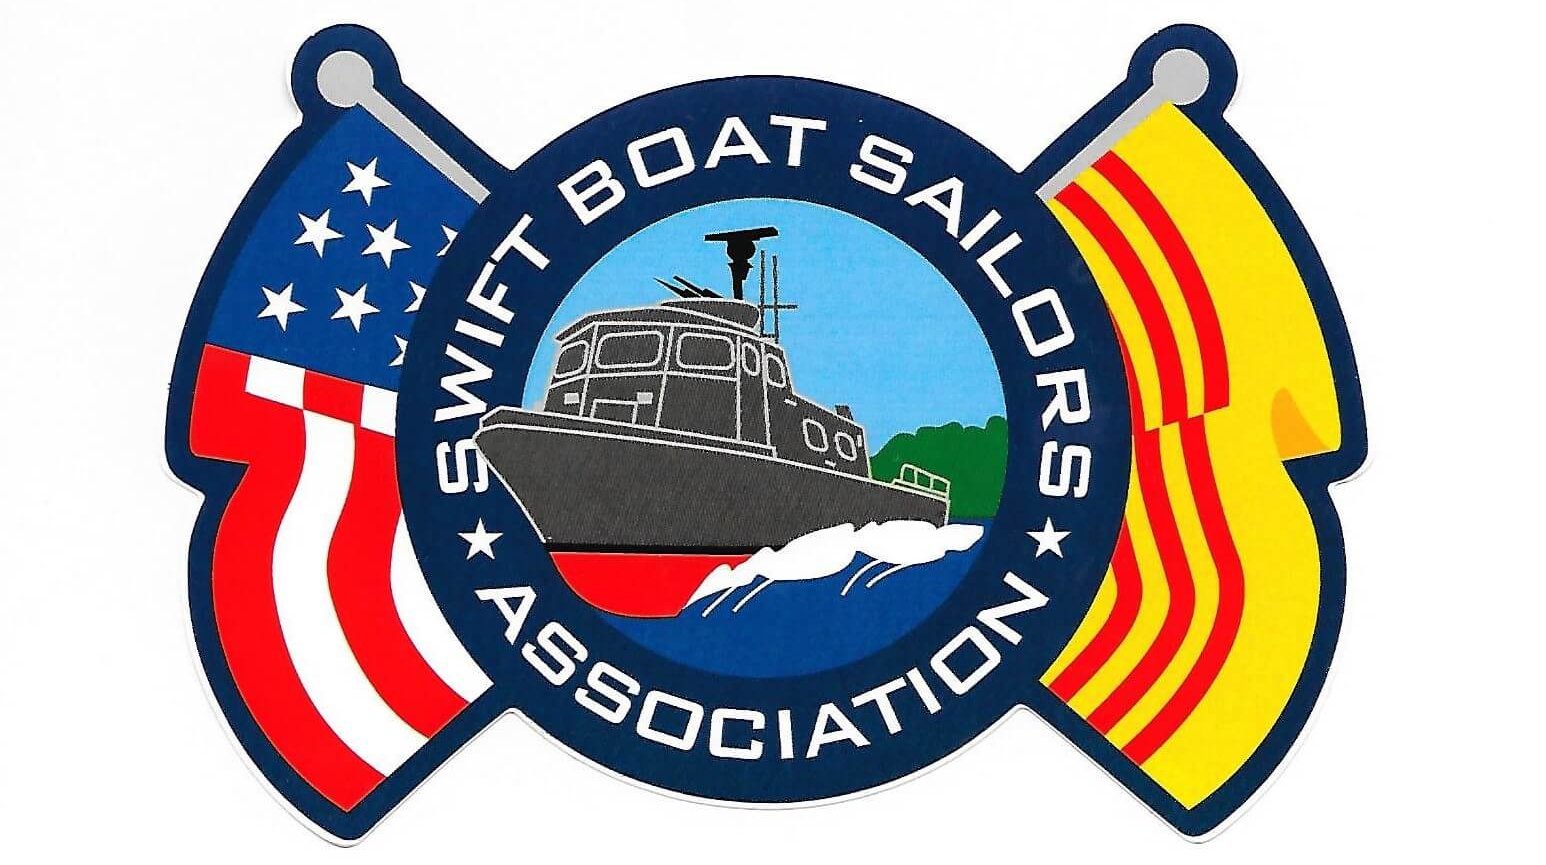 Swift Boat Sailors Association logo.